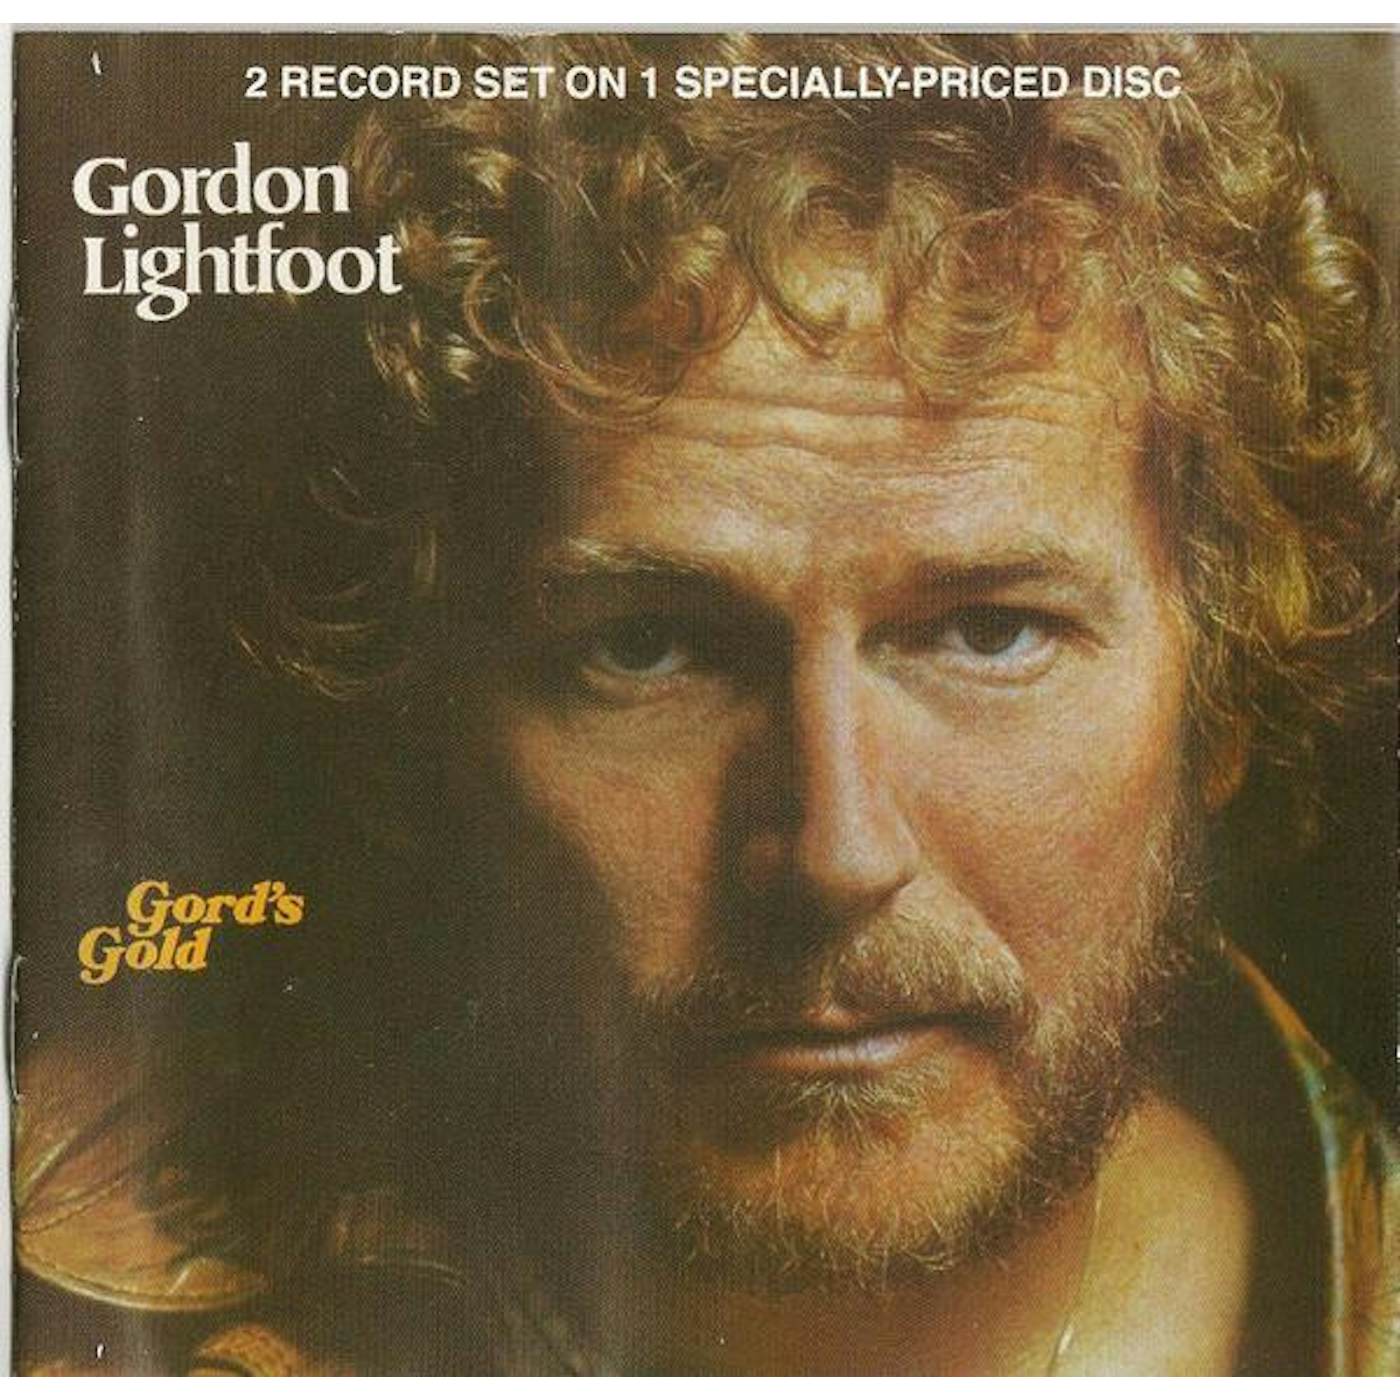 Gordon Lightfoot GORD'S GOLD (GREATEST HITS) CD